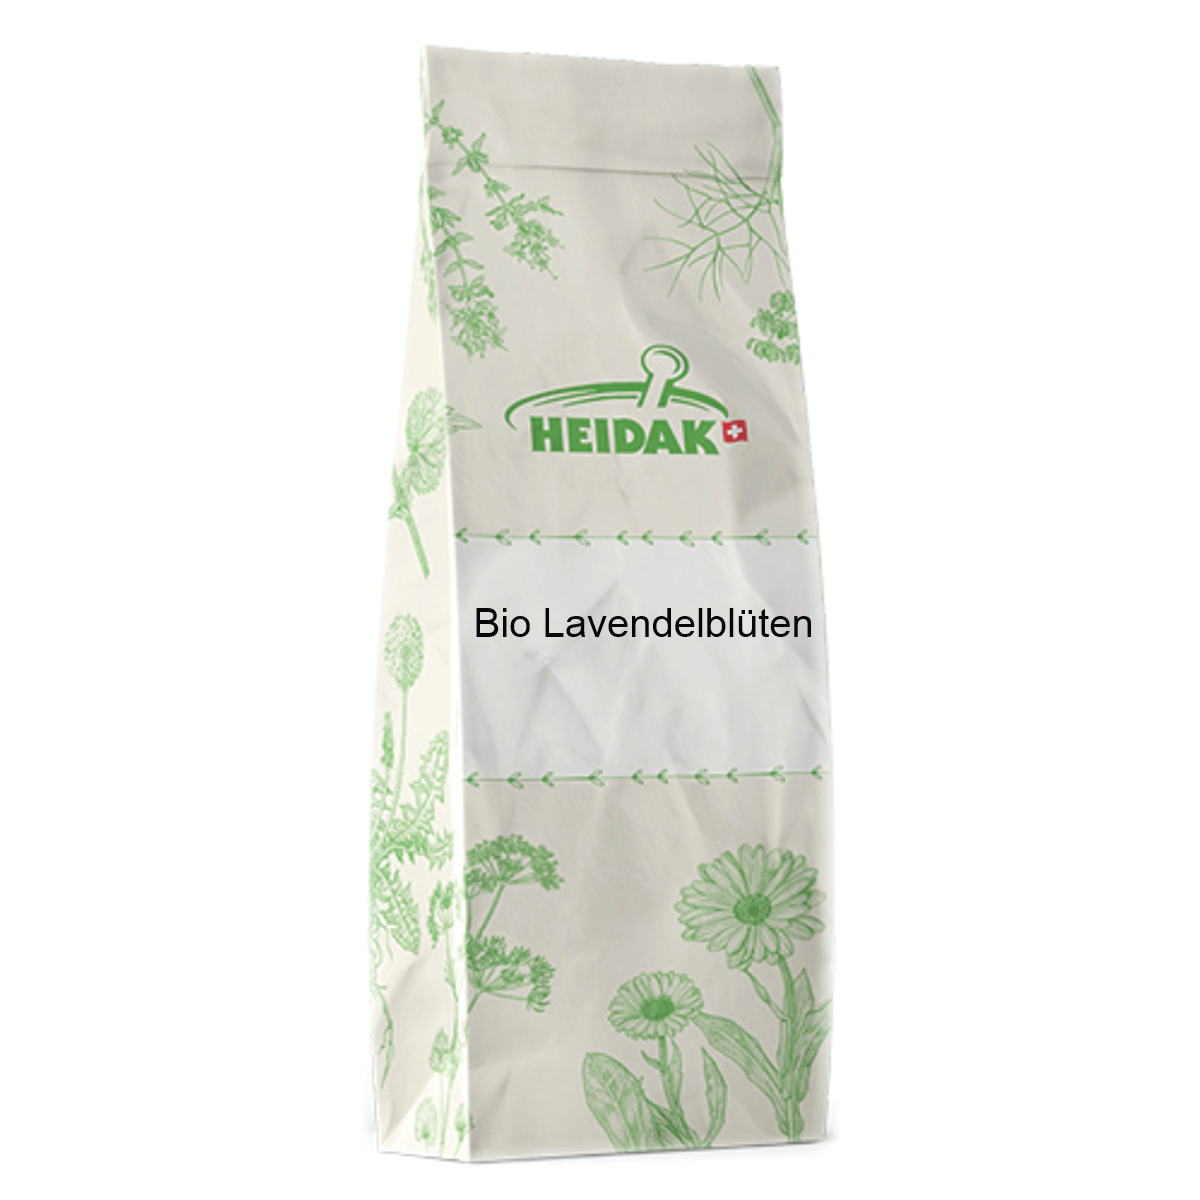 Heidak_Bio_Lavendelblueten_online_kaufen